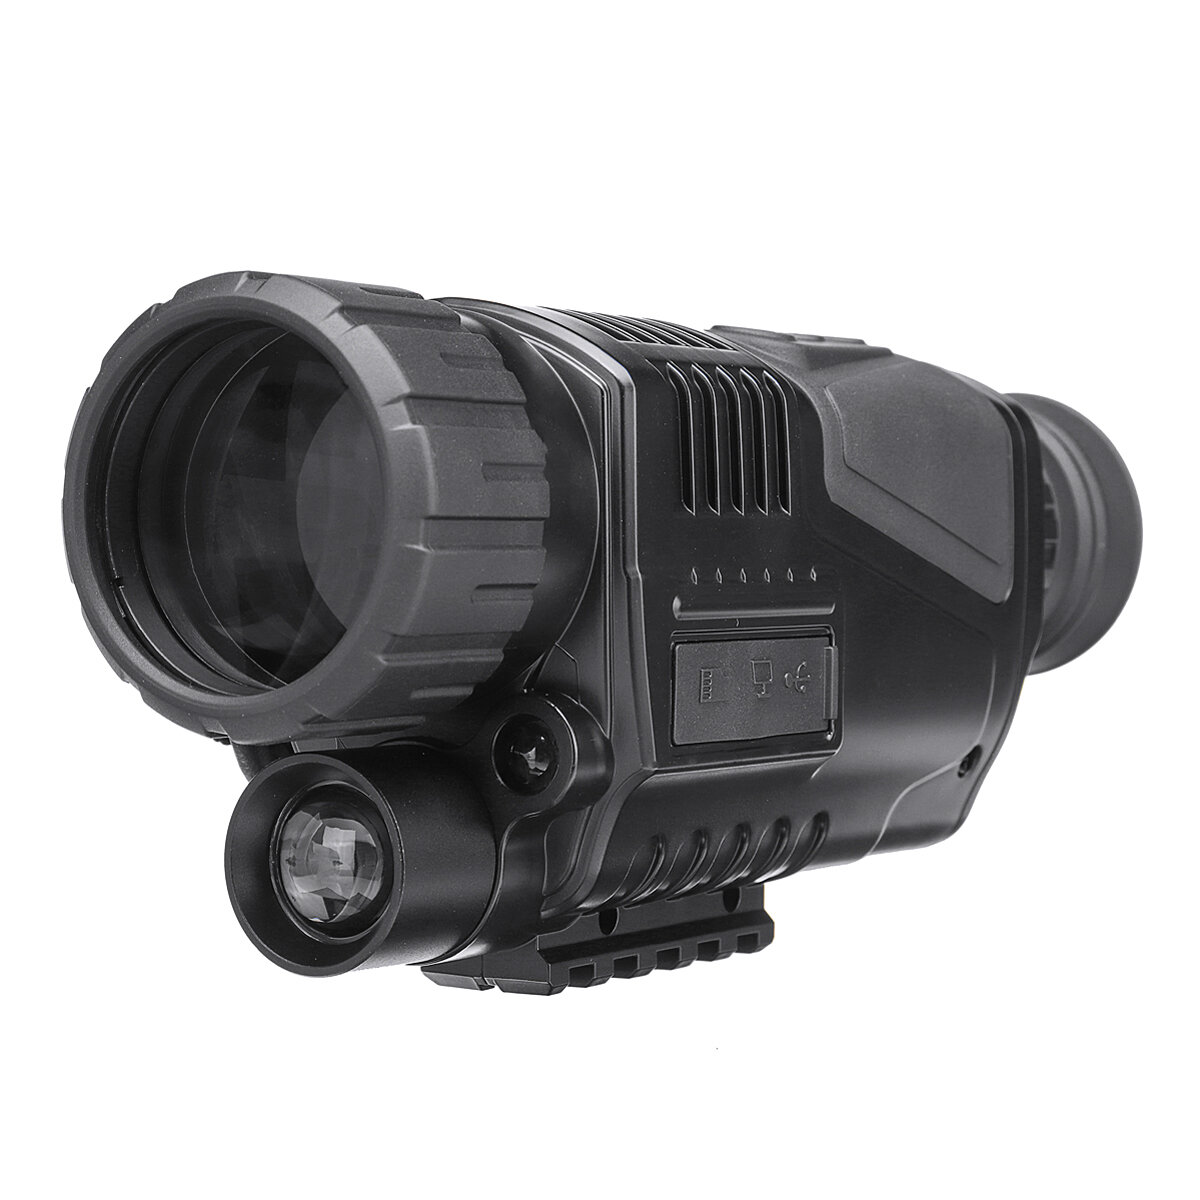 5x40 Digital Night Vision Monocular FMC Infrared Telescope Video Camera Telephoto Support